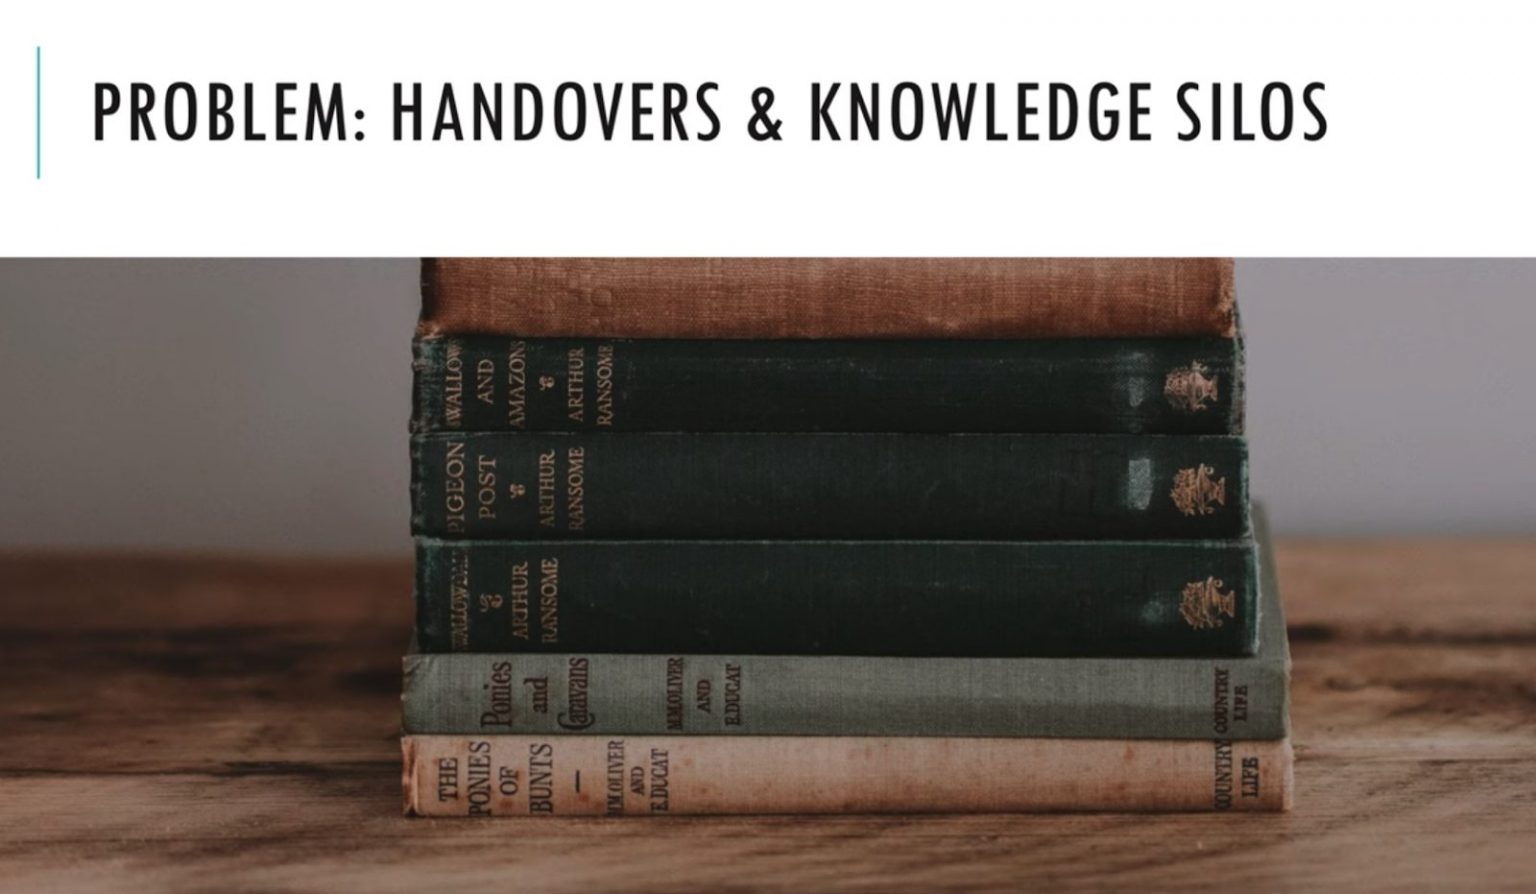 Handovers and knowledge silos